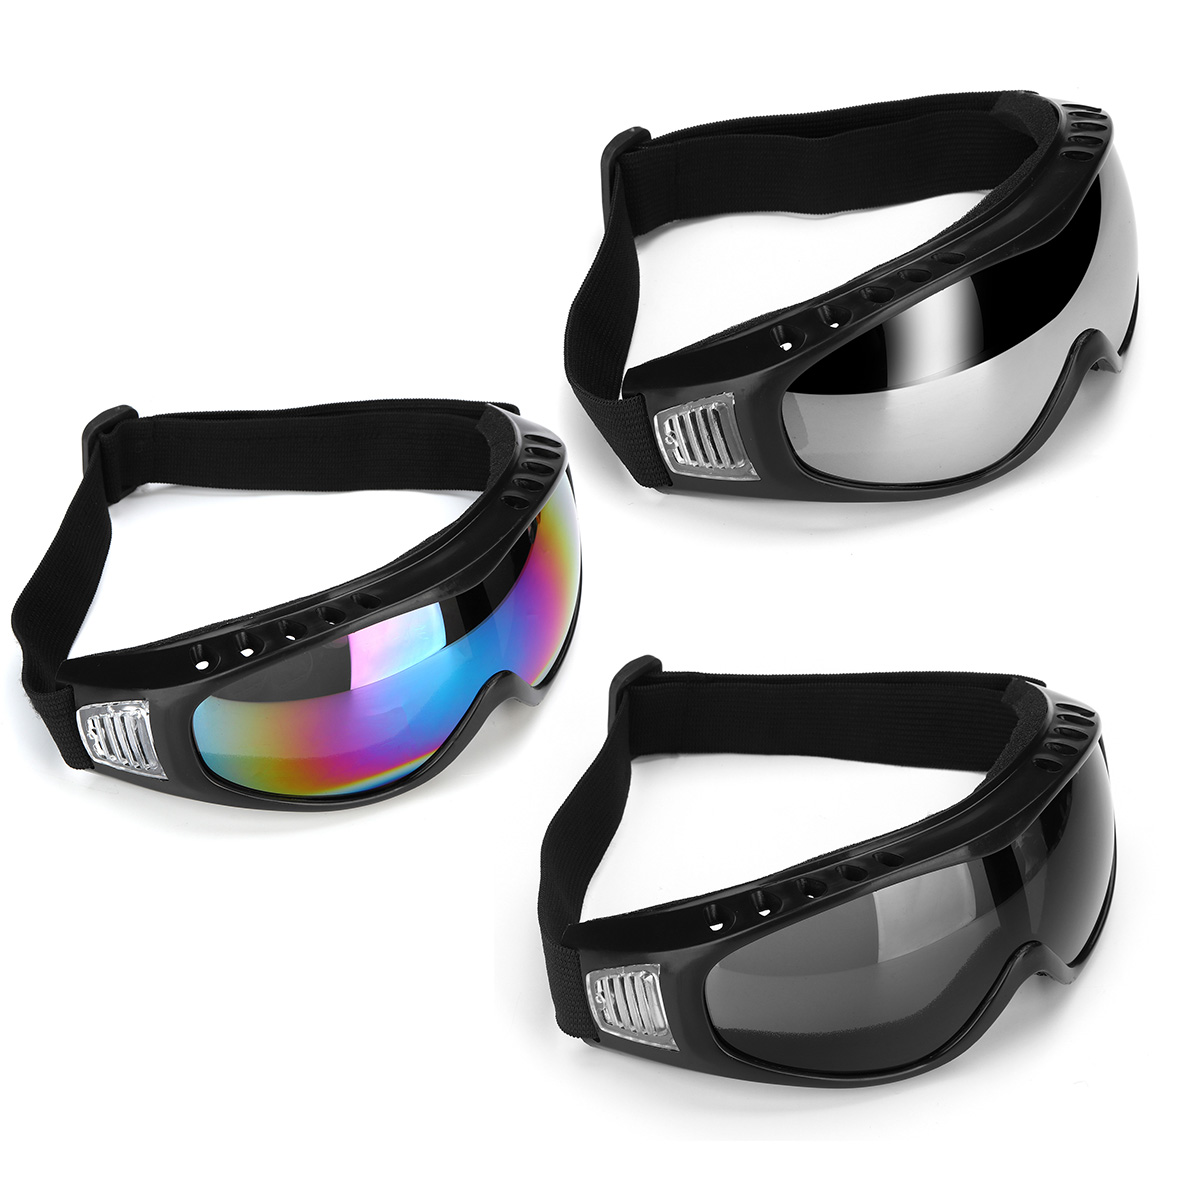 Anti fog Dust Wind UV Water Snow Snowboard Goggles Helmet Ski Sunglasses Glasses